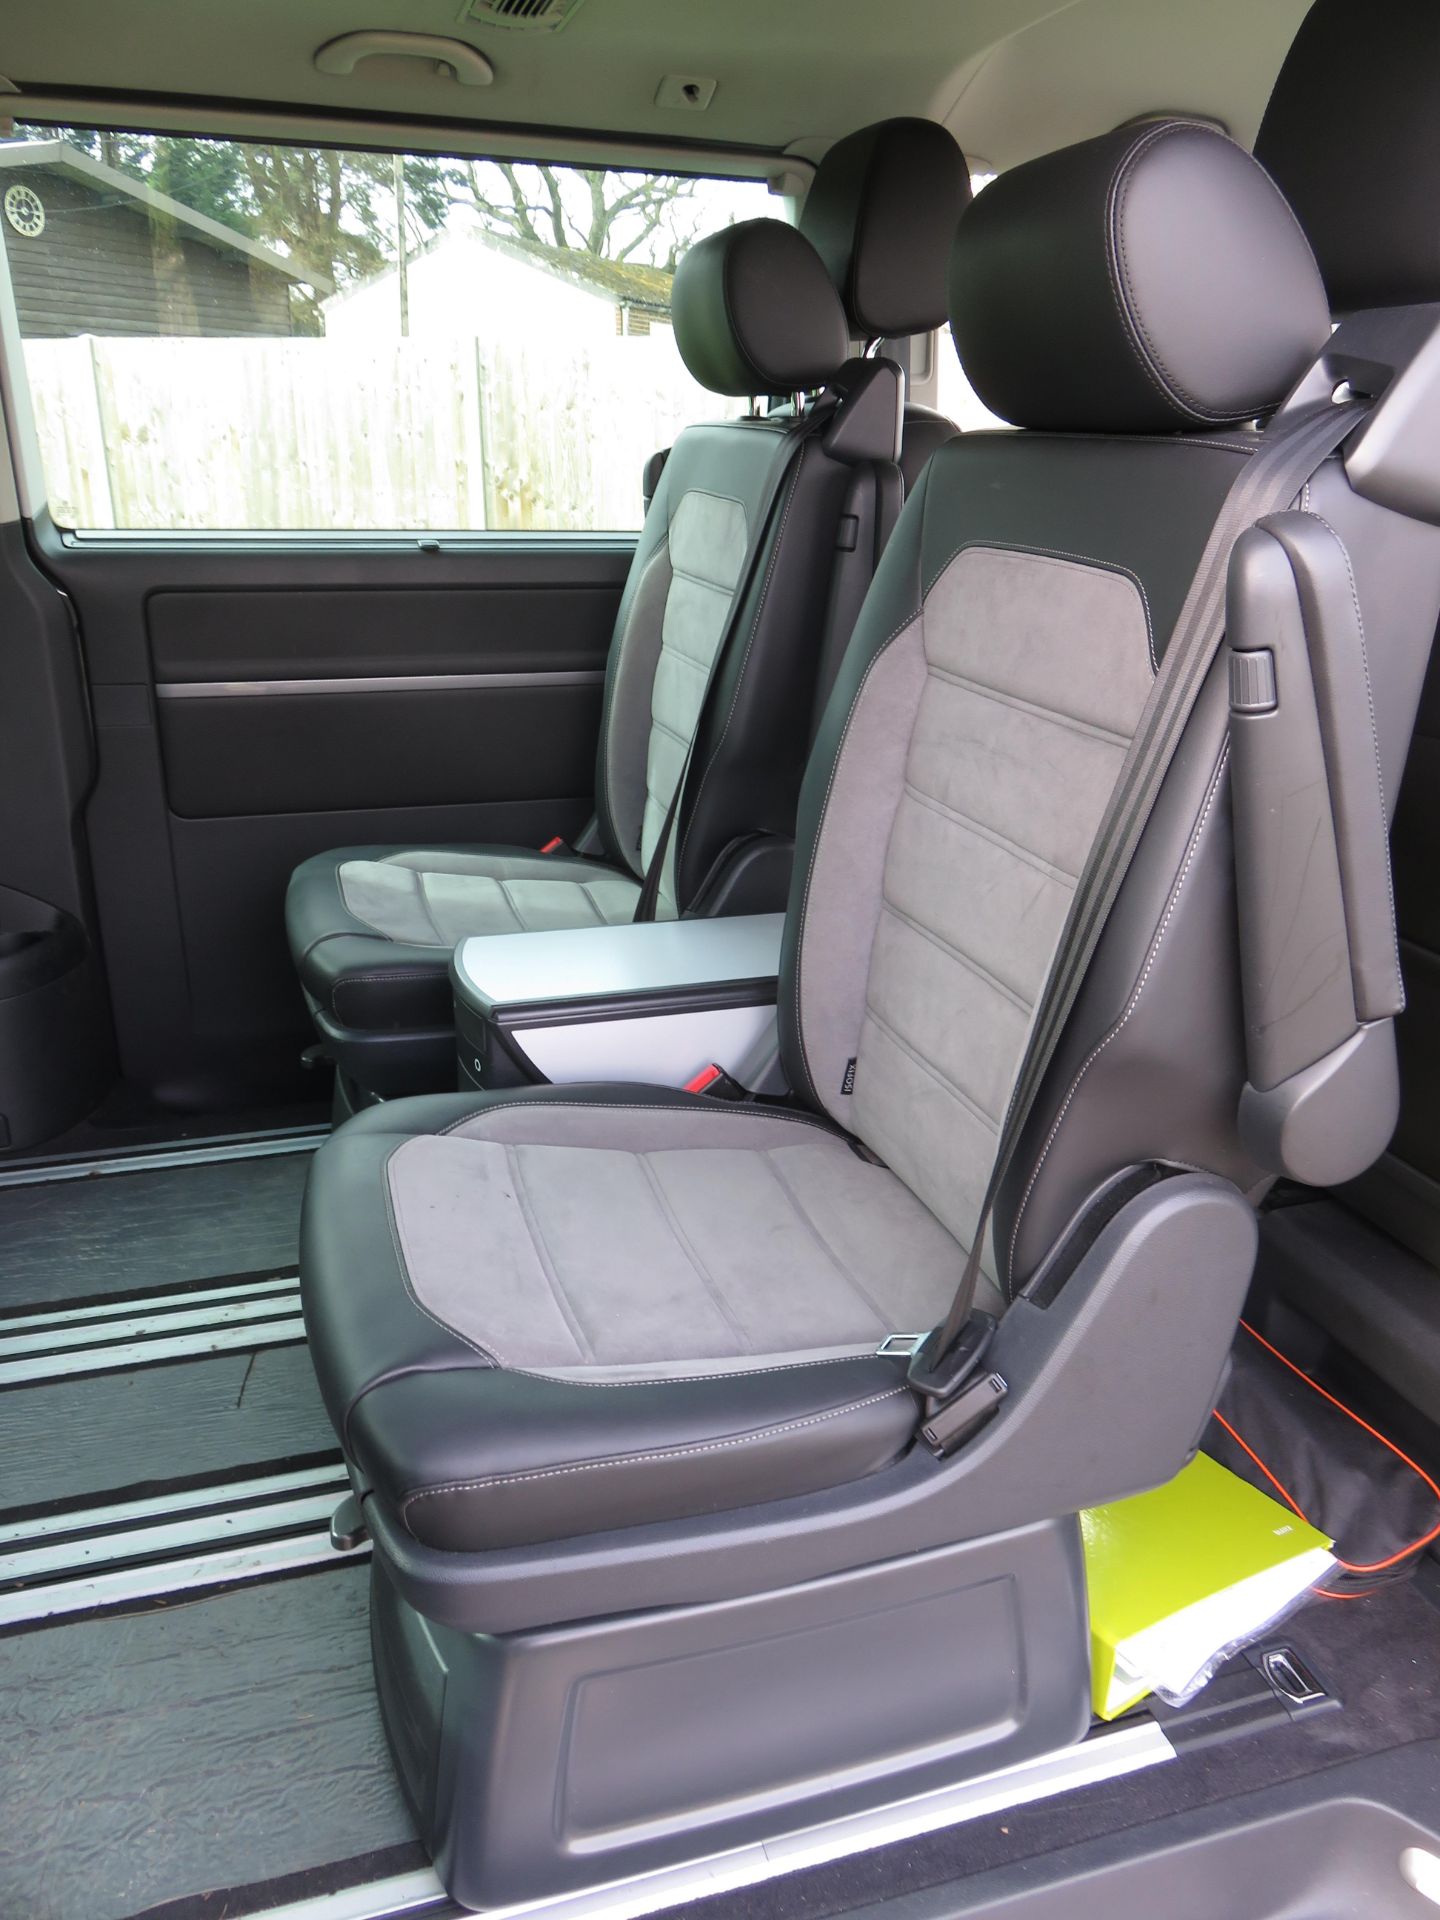 1 Volkswagen Caravelle 2.0 TDI (150PS) Executive BMT SNB DSG 7 Seat Five Door MPV - Image 9 of 17